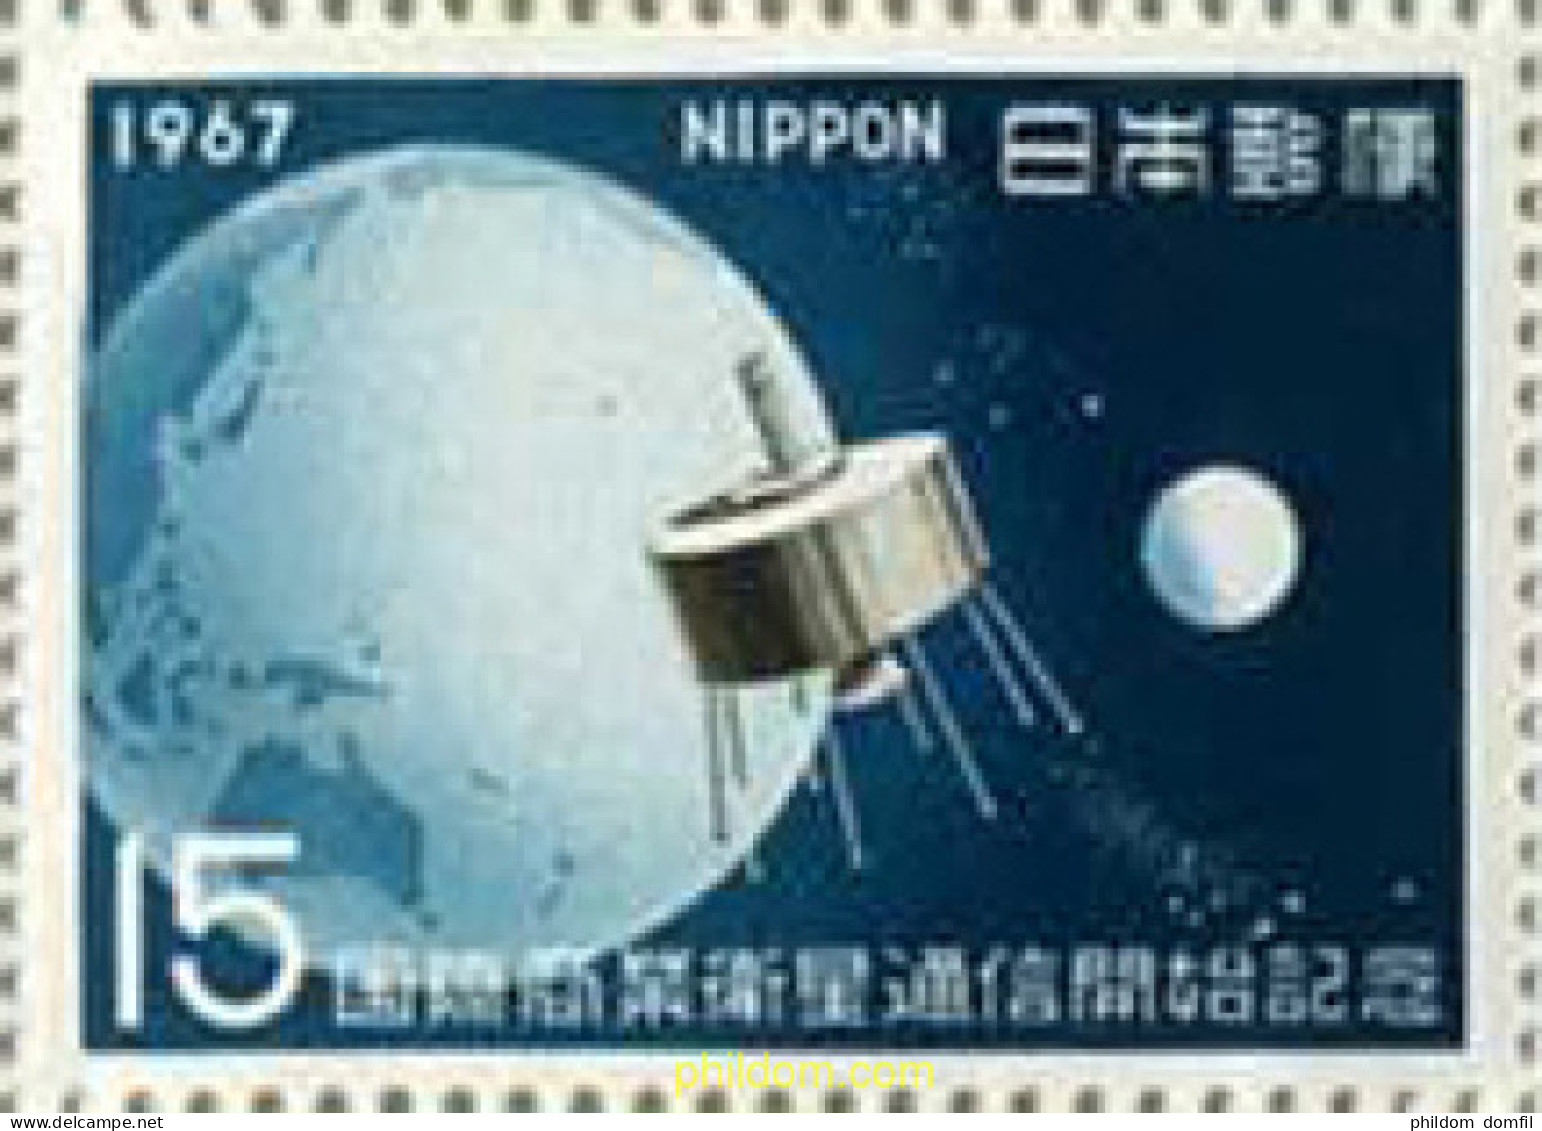 217794 MNH JAPON 1967 SATELITE DE TELECOMUNICACIONES - Unused Stamps